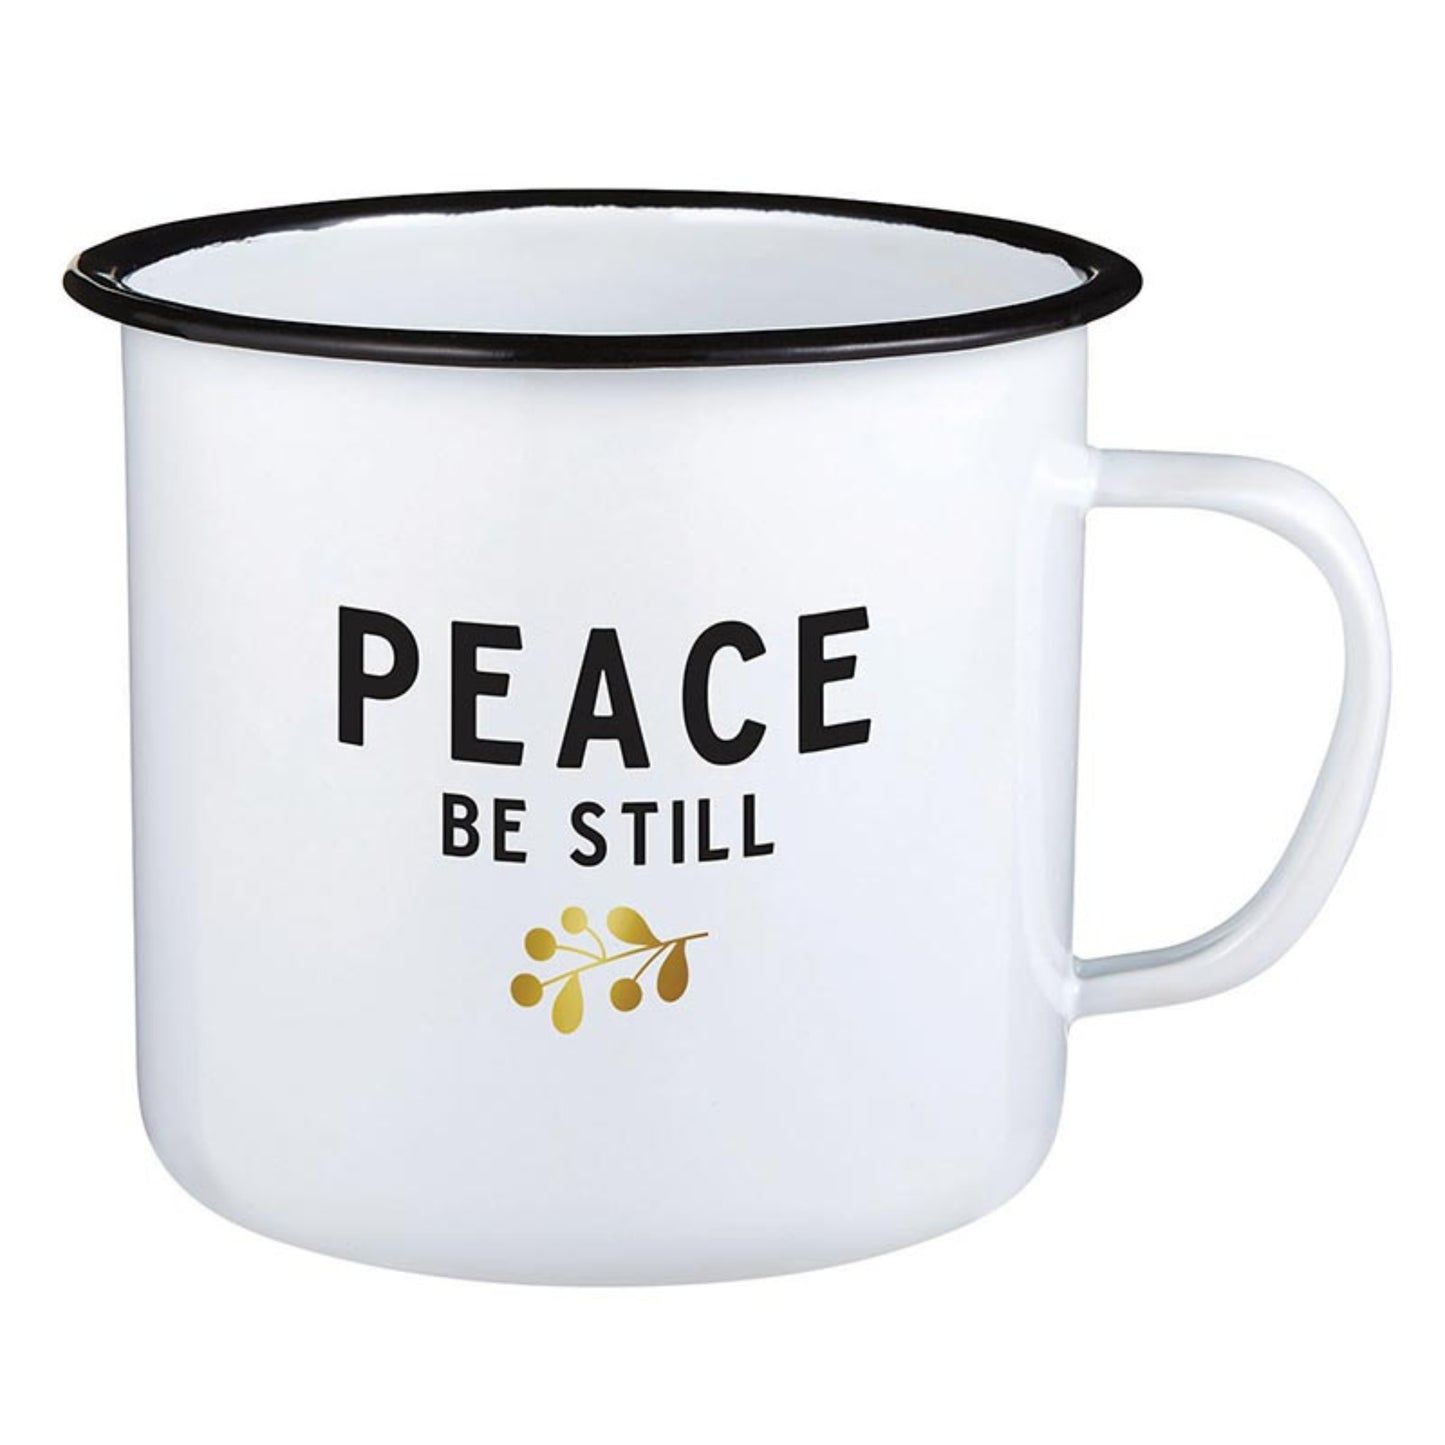 PEACE BE STILL - Enamel Campfire Style Mug | Inspirational drinkware | oak7west.com